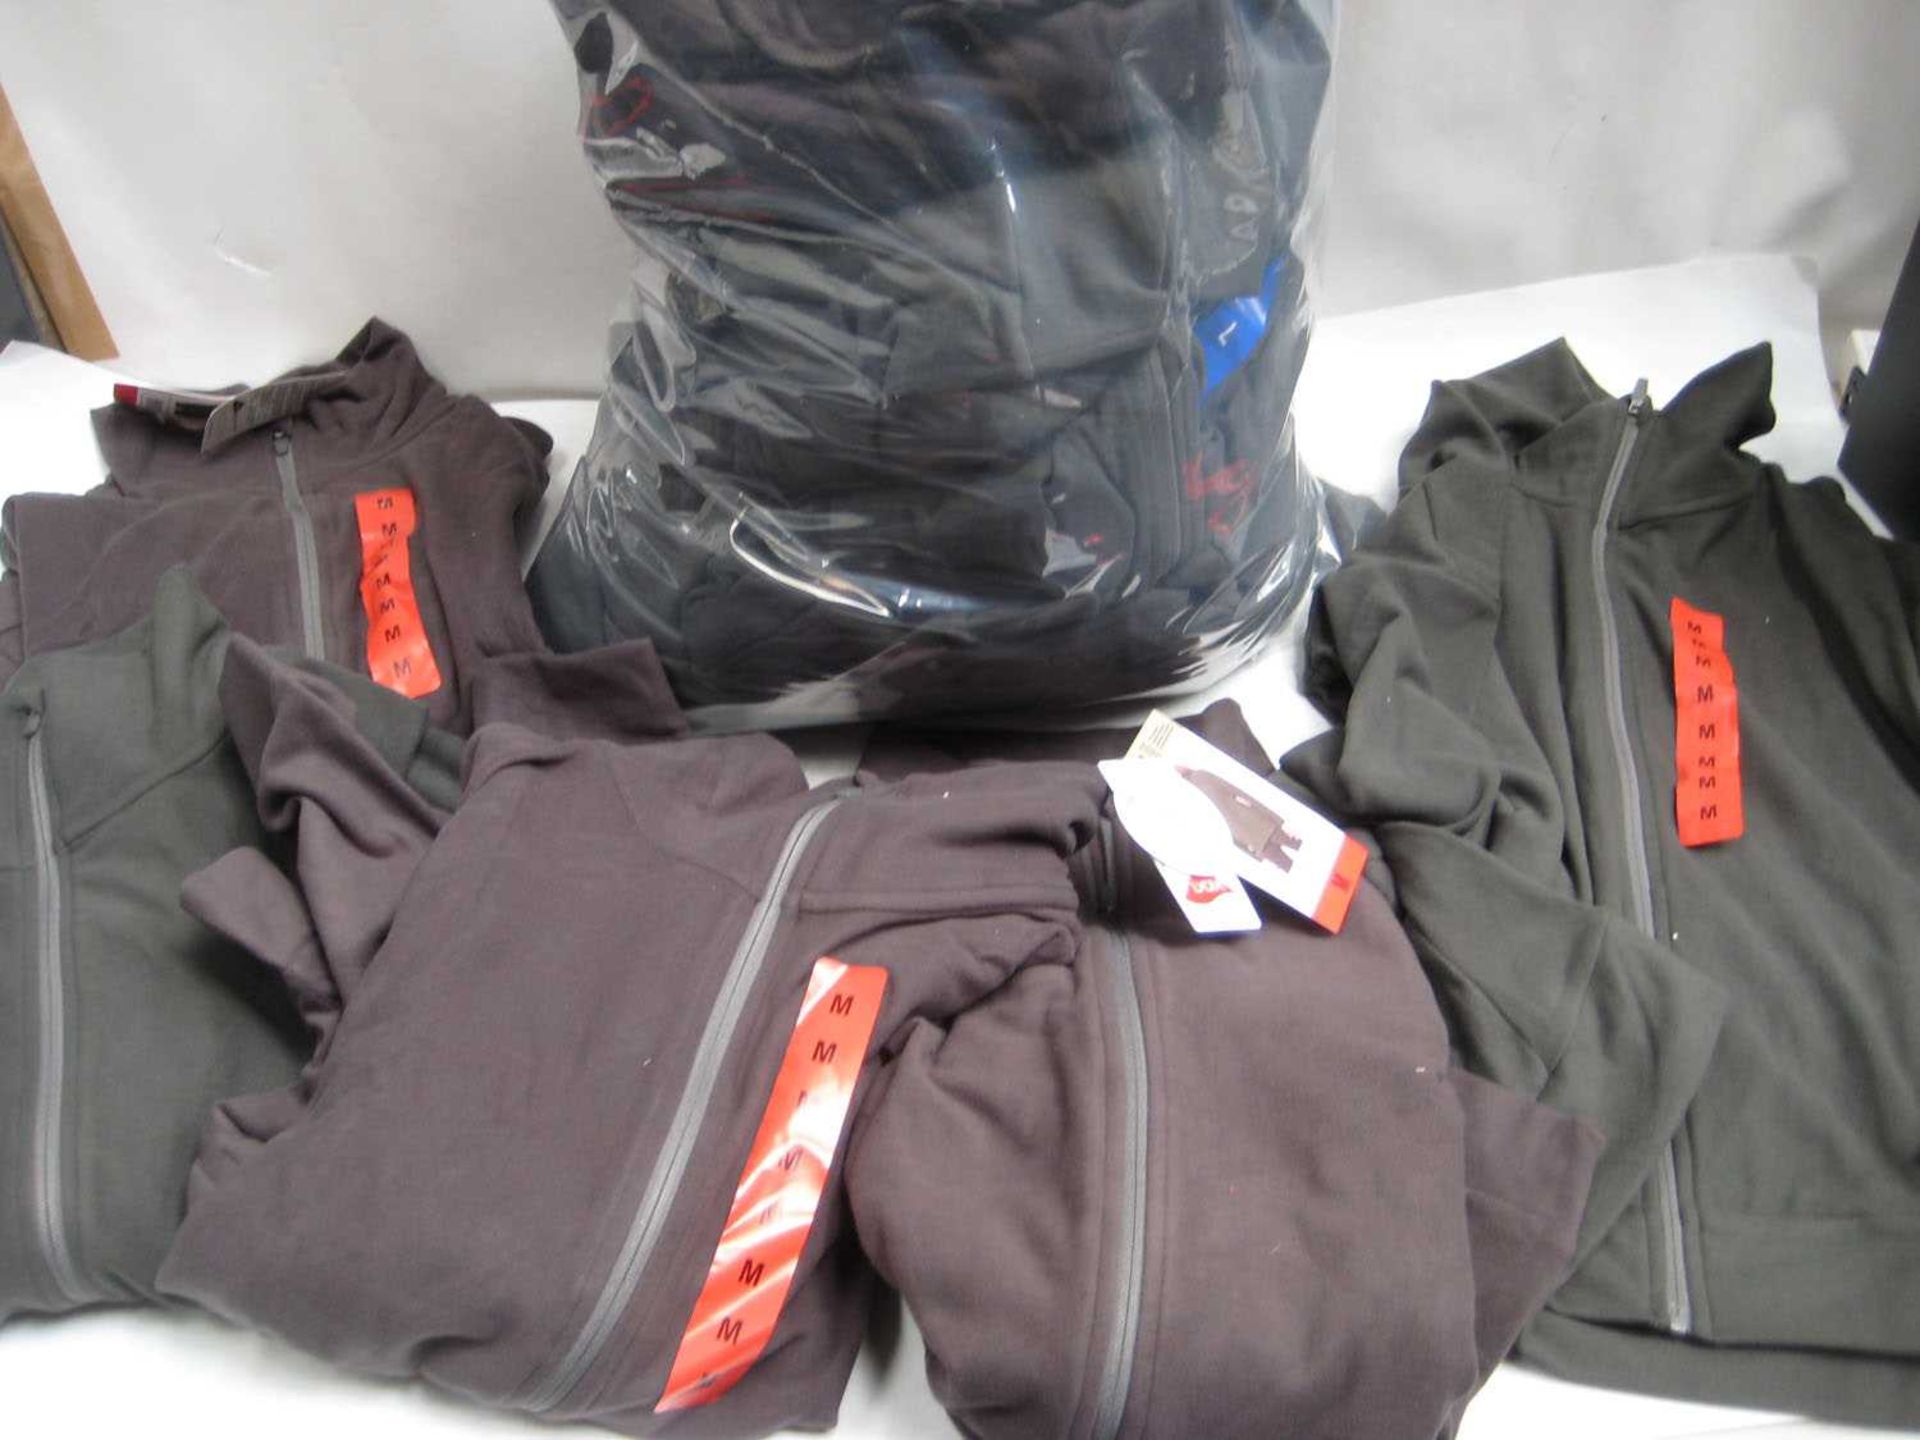 +VAT A bag containing 20x Ladies Grey Mondetta Zip Jackets in various sizes.